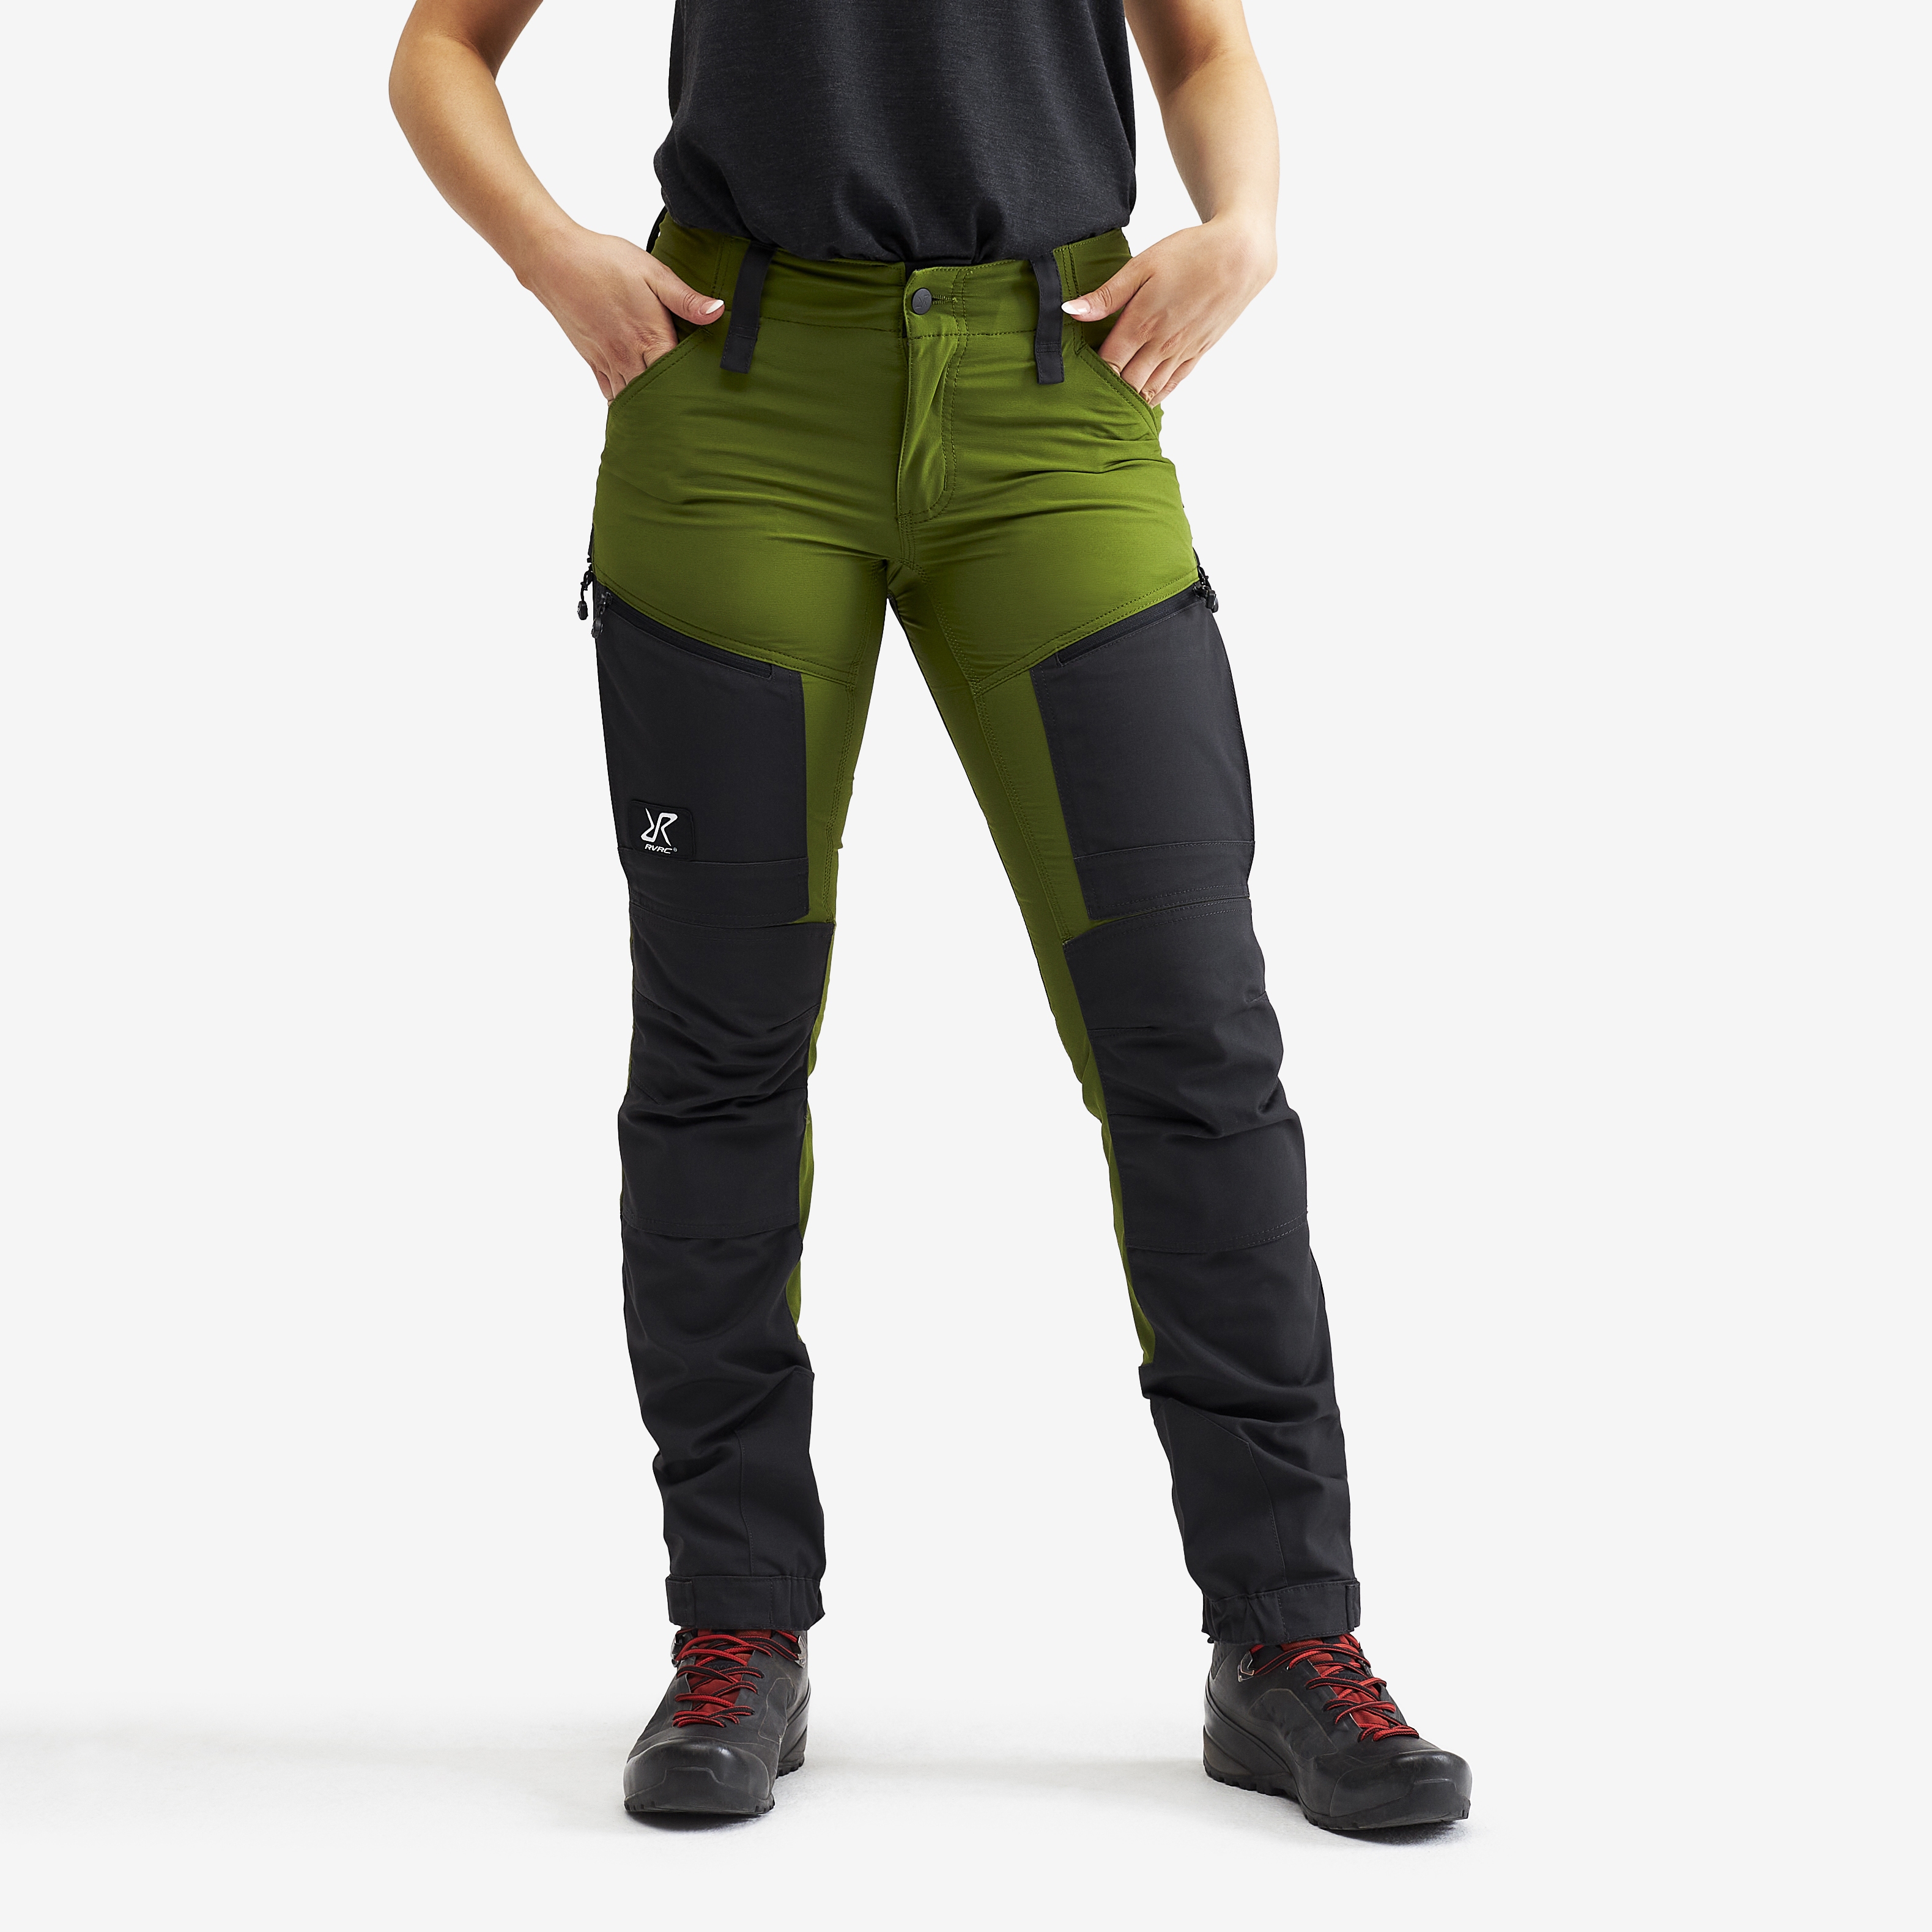 Pantalones trekking RVRC GP Pro para mujer en verde